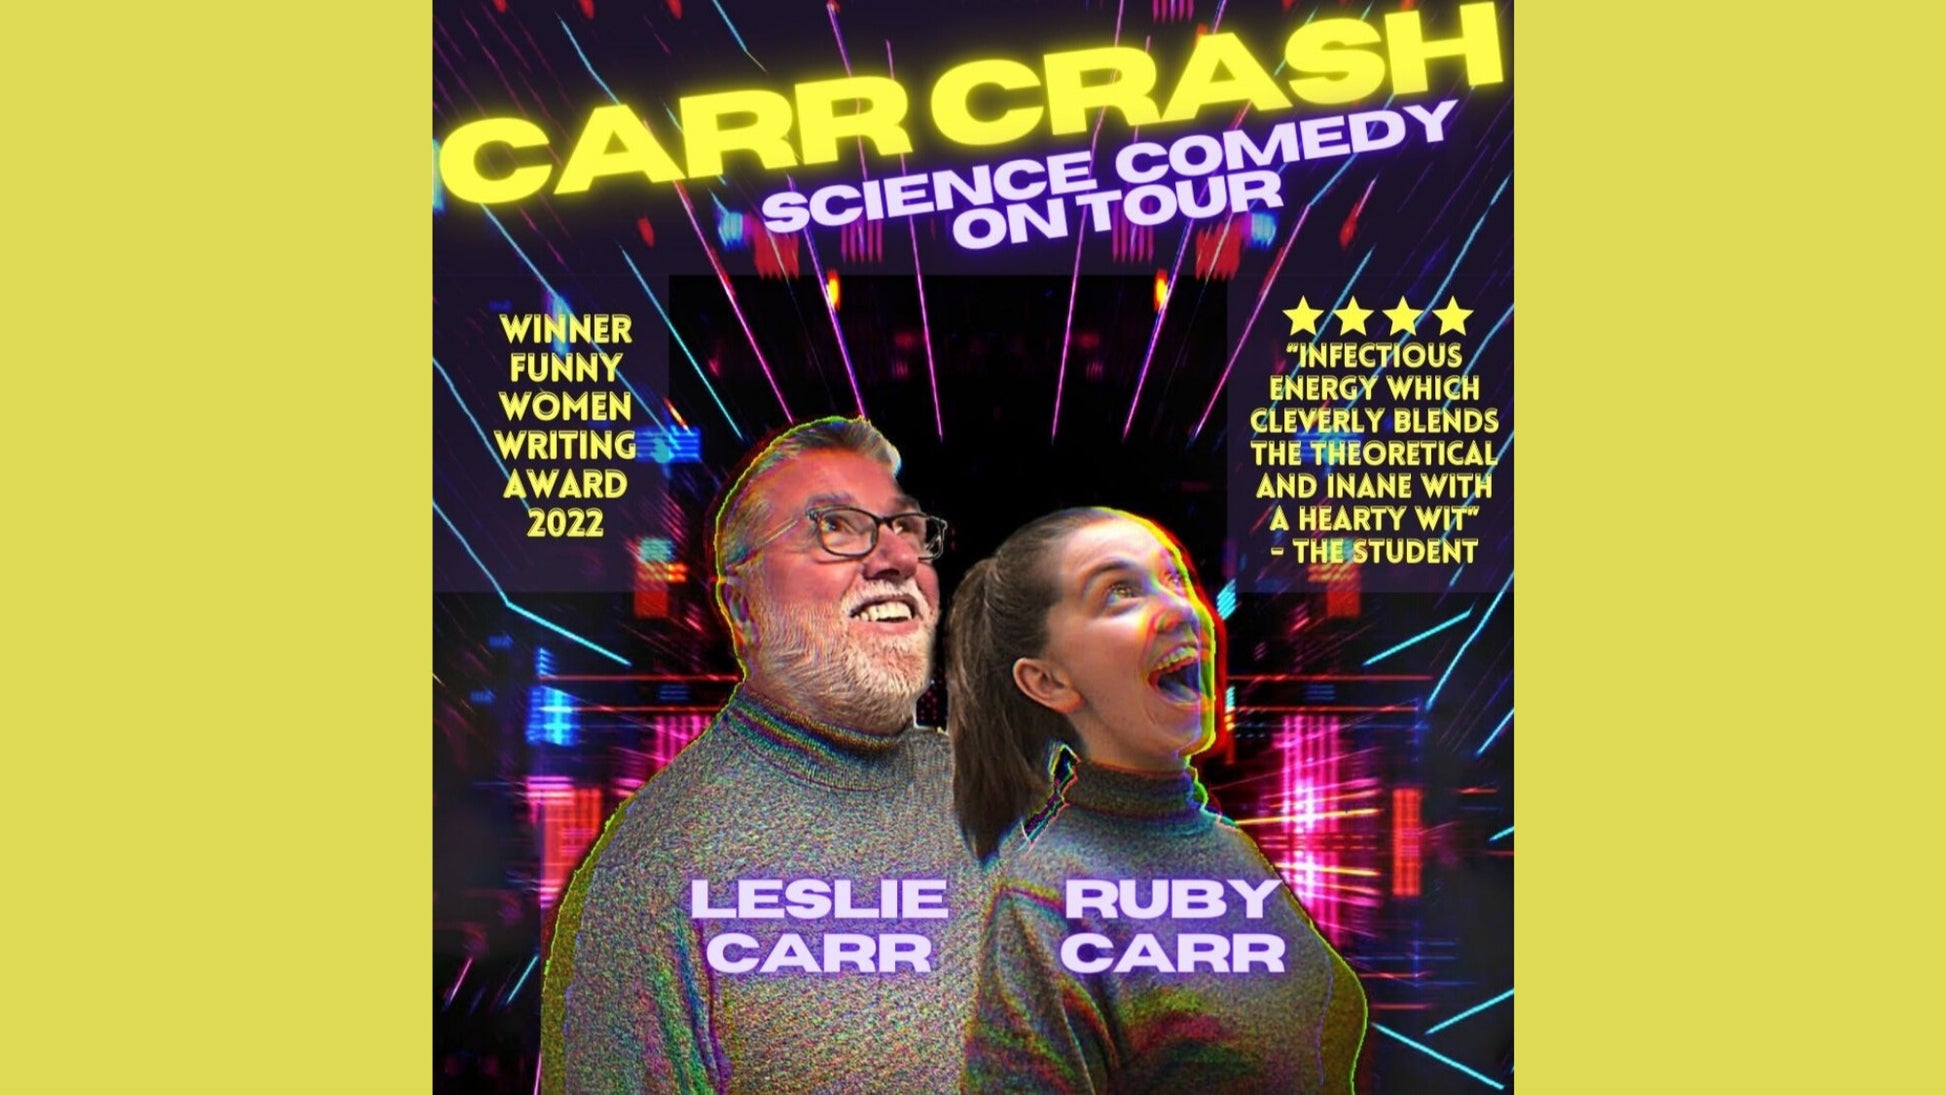 Carr Crash comedy in Southampton